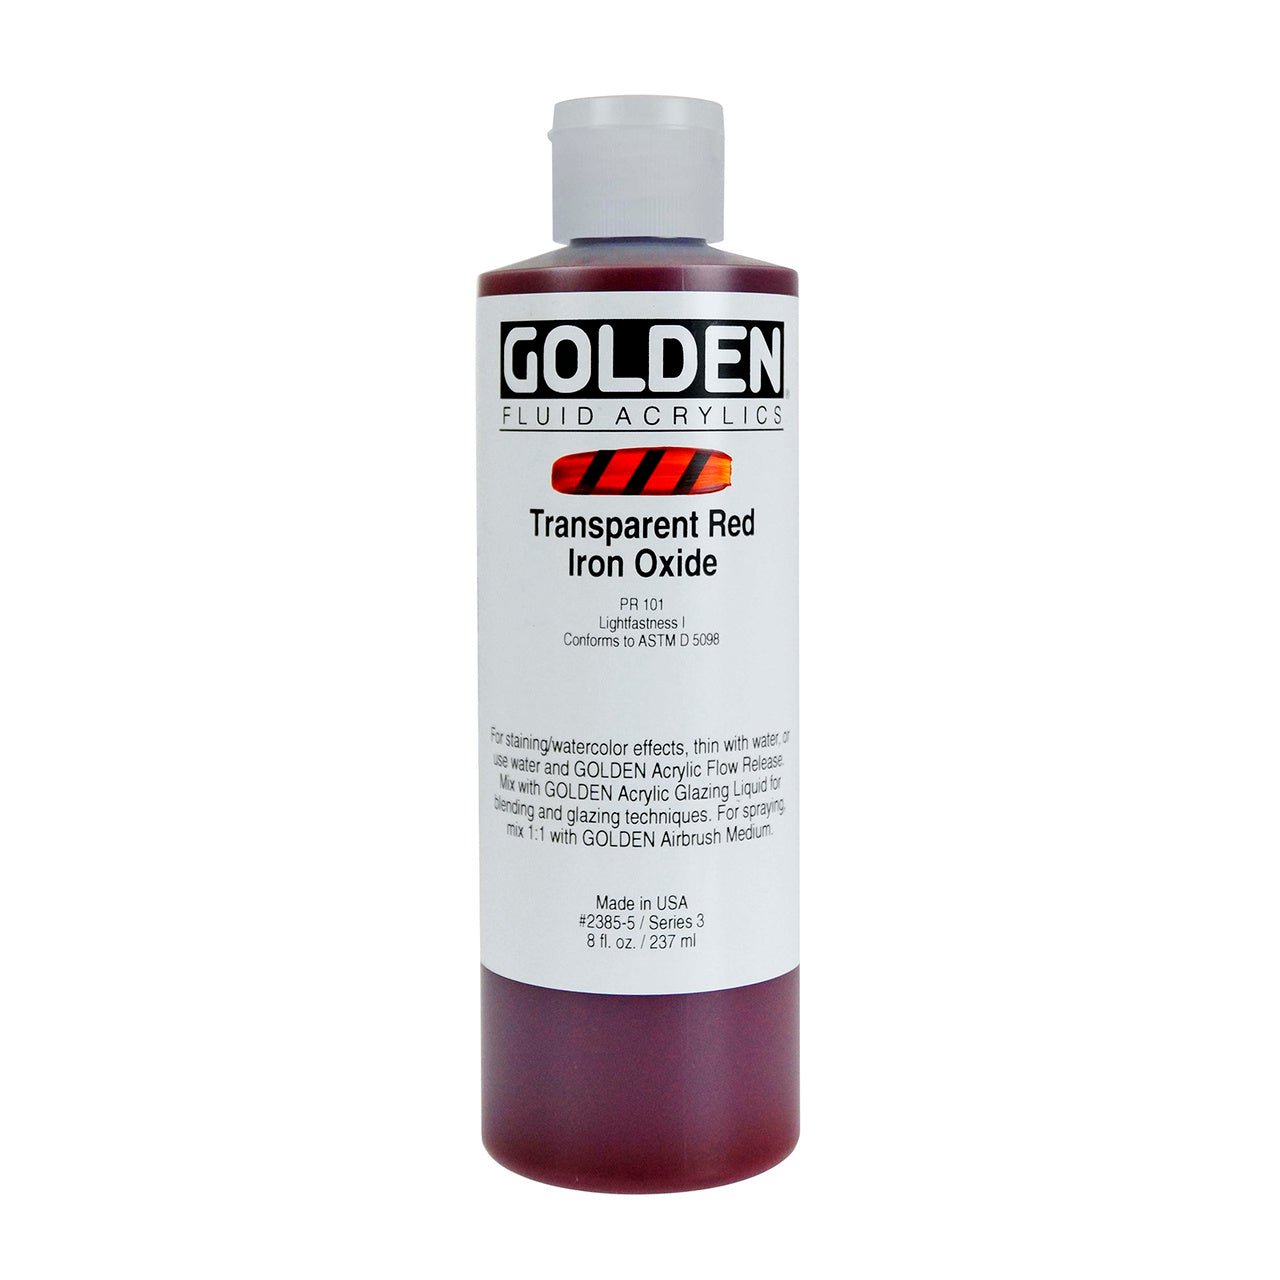 Golden Fluid Acrylic Transparent Red Iron Oxide 8 oz - merriartist.com